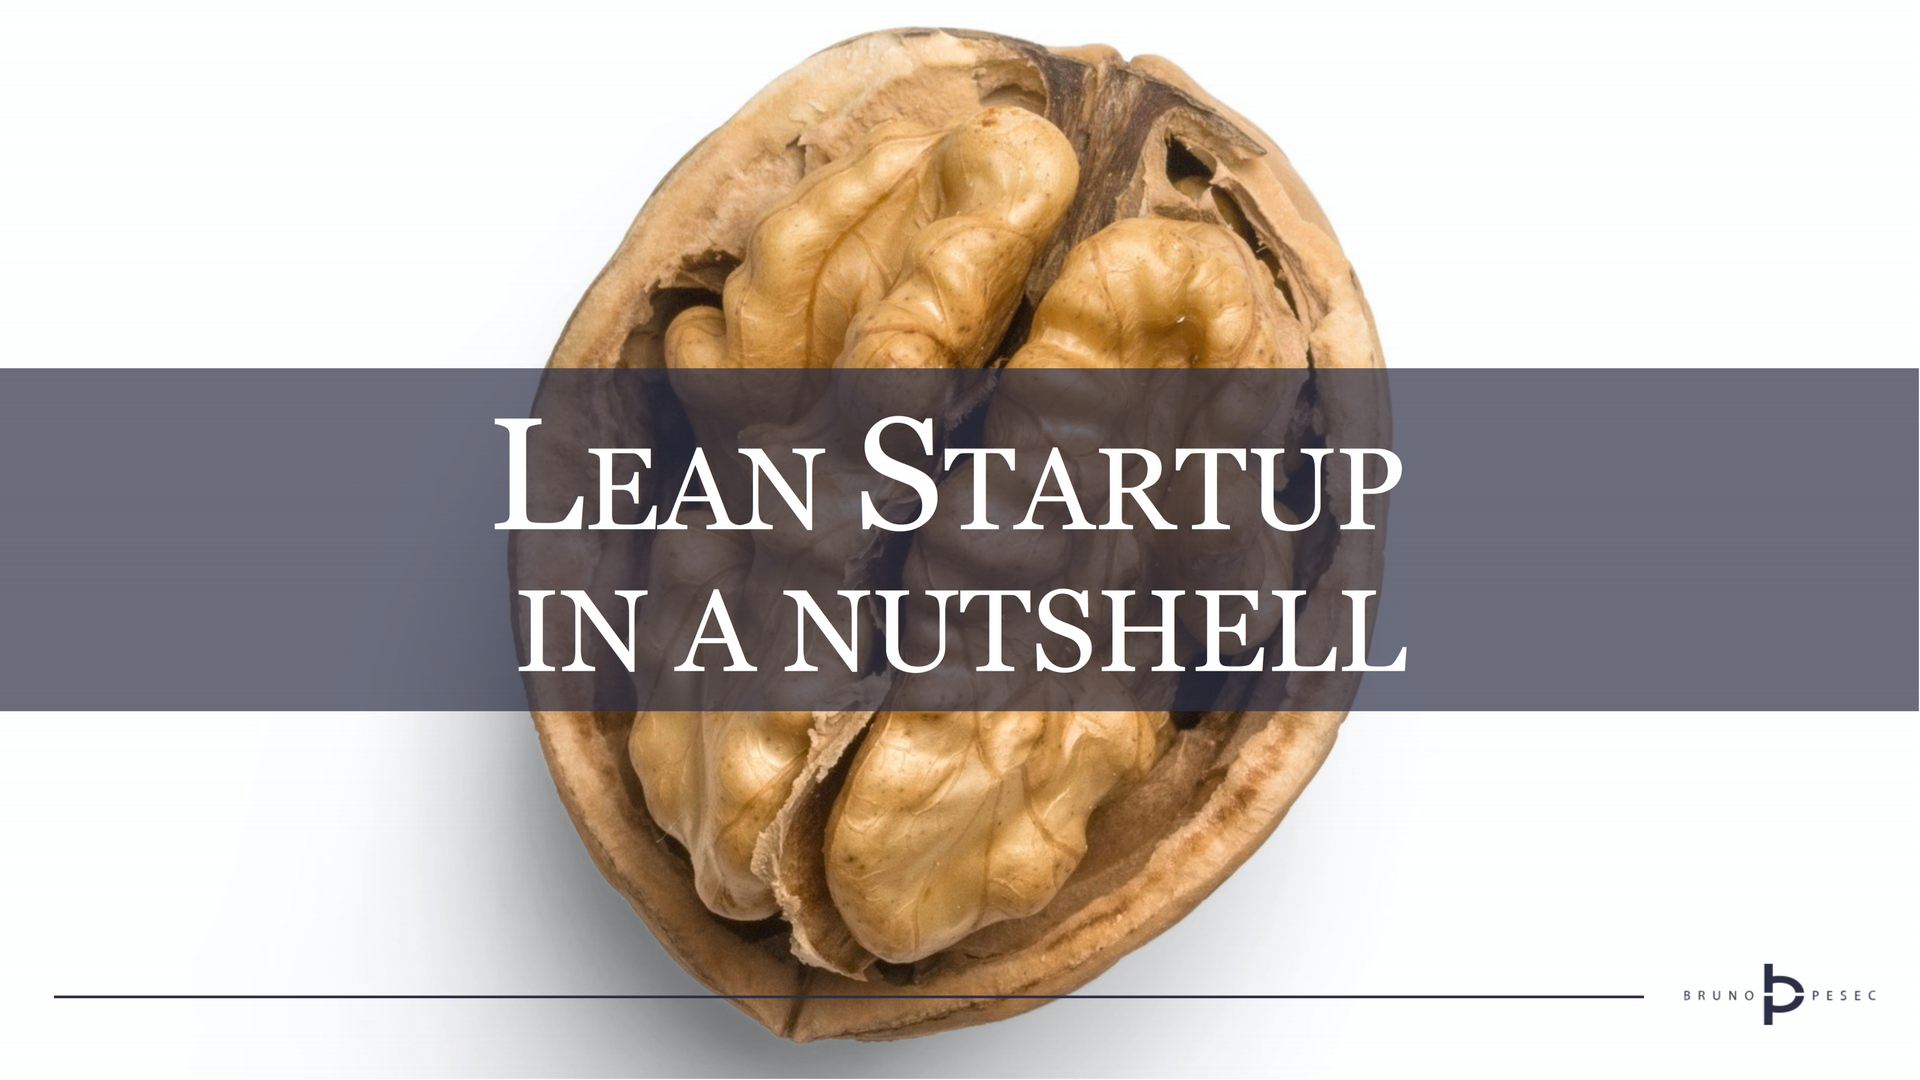 Lean Startup in a nutshell